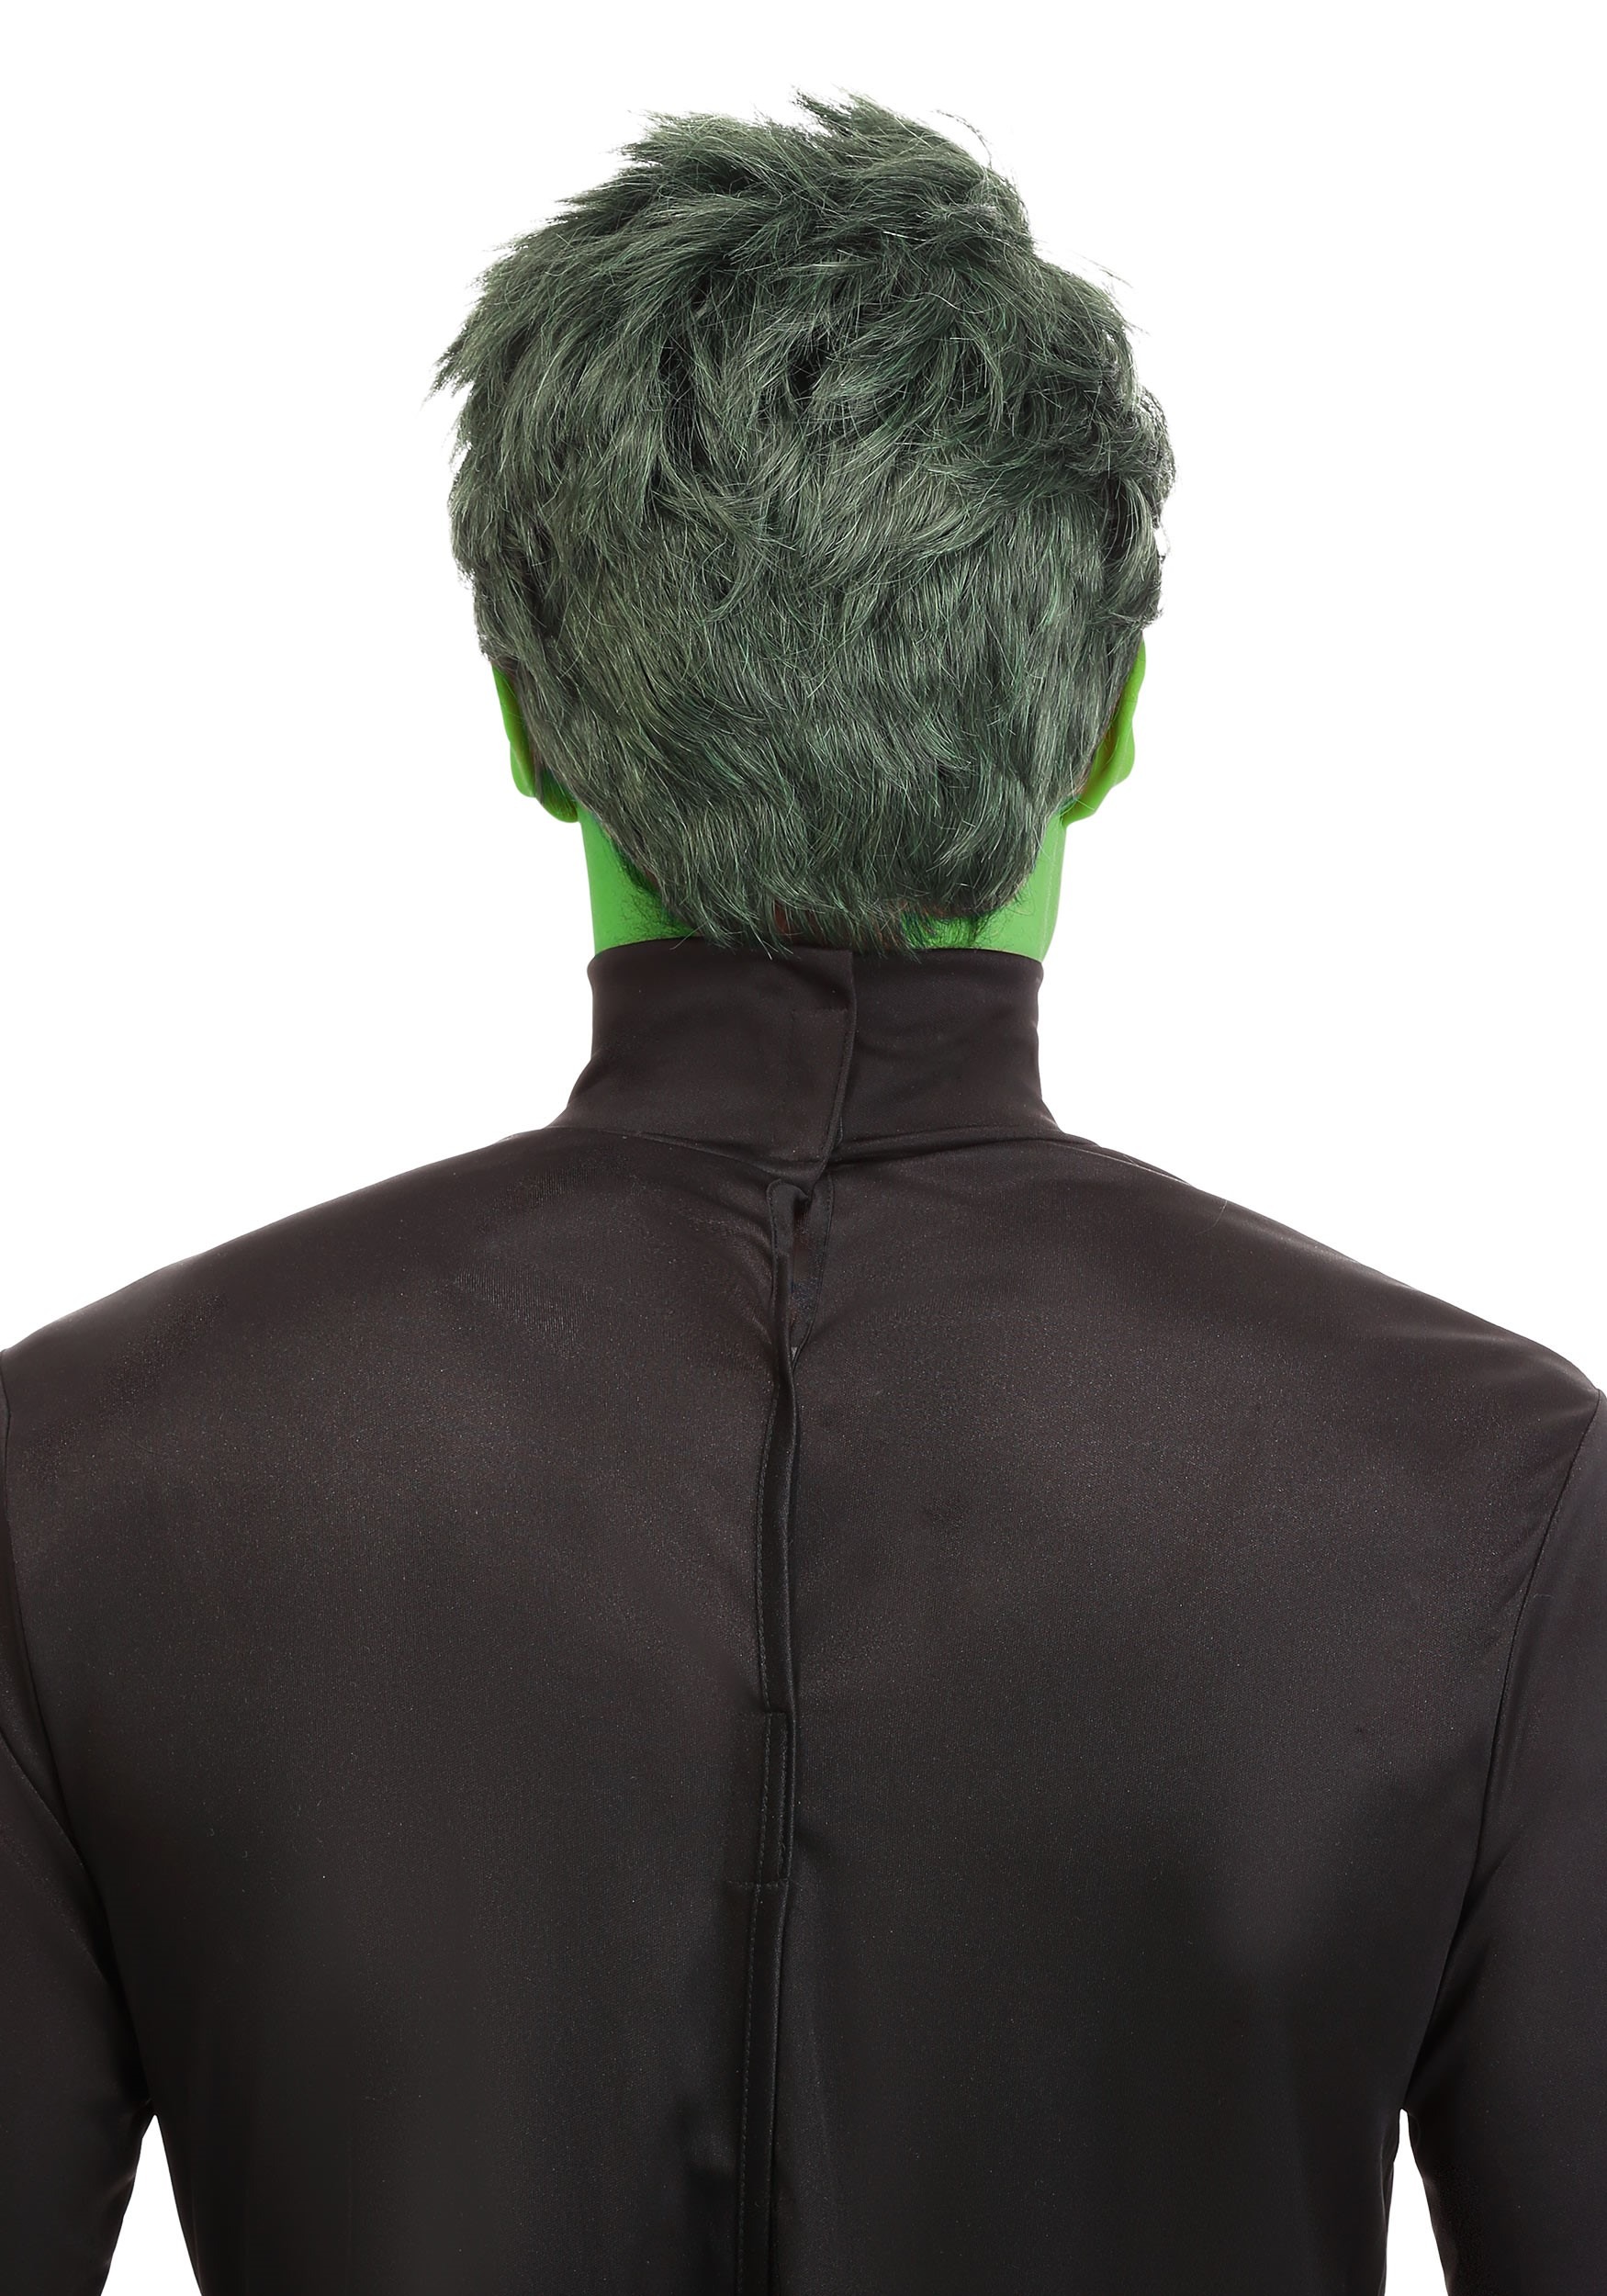 Green Shapeshifting Superhero Wig For Men